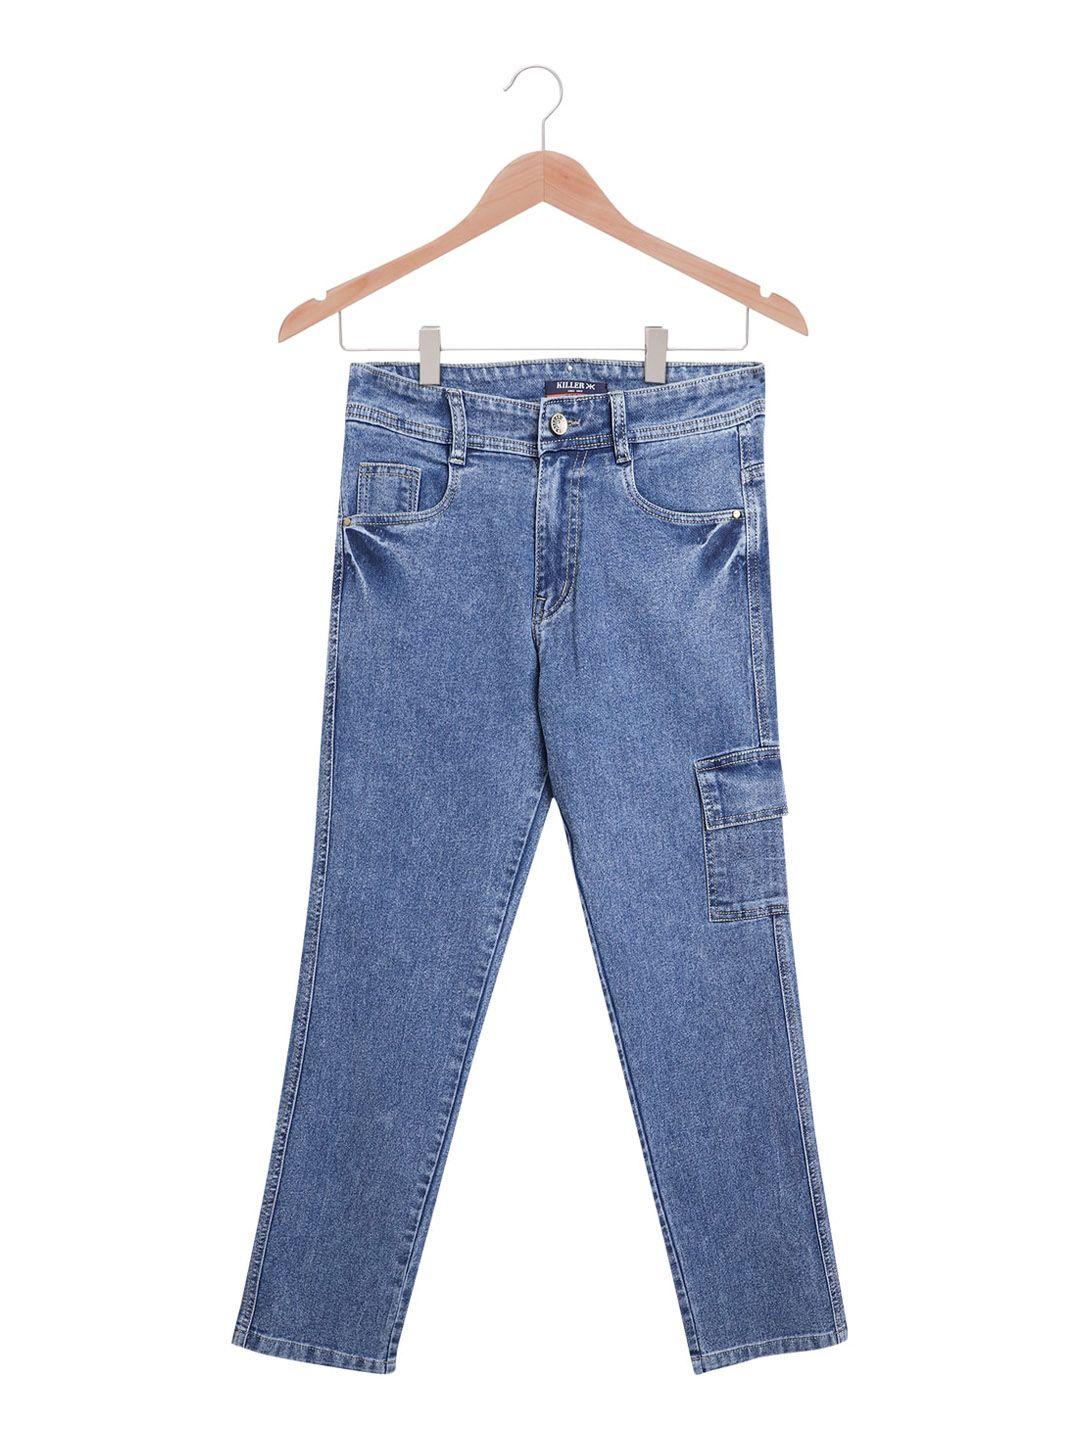 killer-boys-clean-look-mid-rise-cotton-jeans